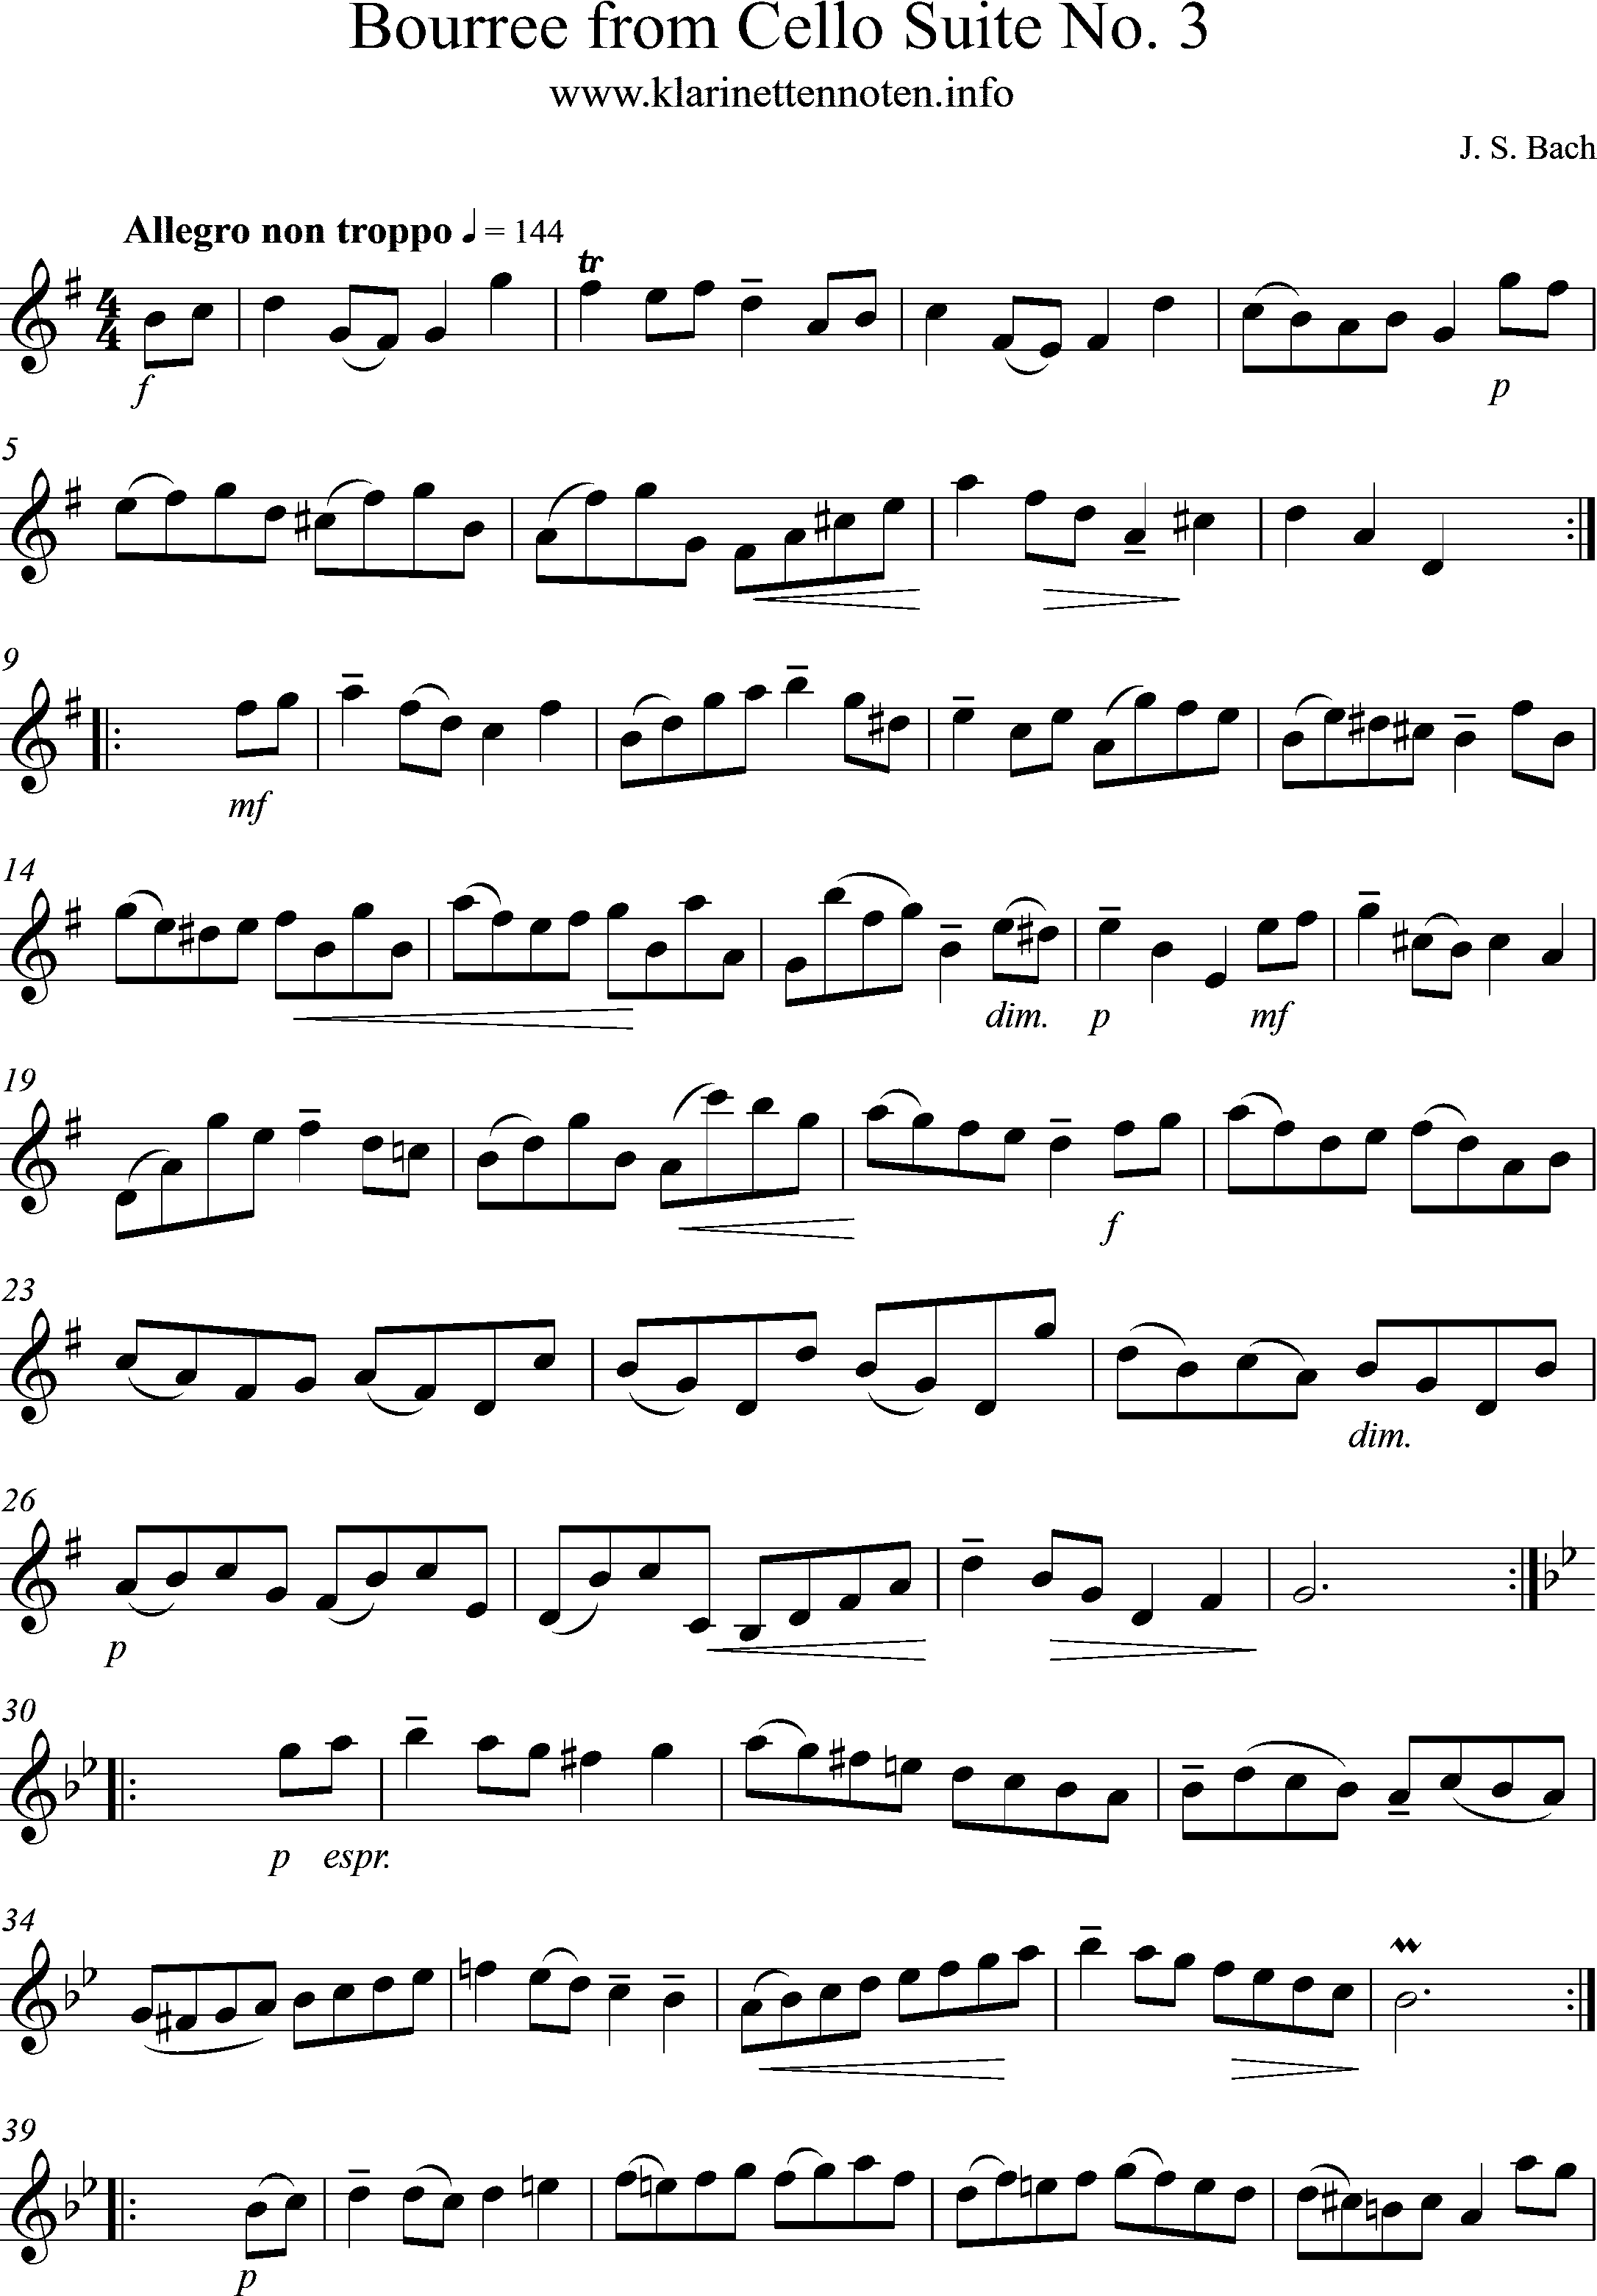 Noten - Bourree Cellosuite 3